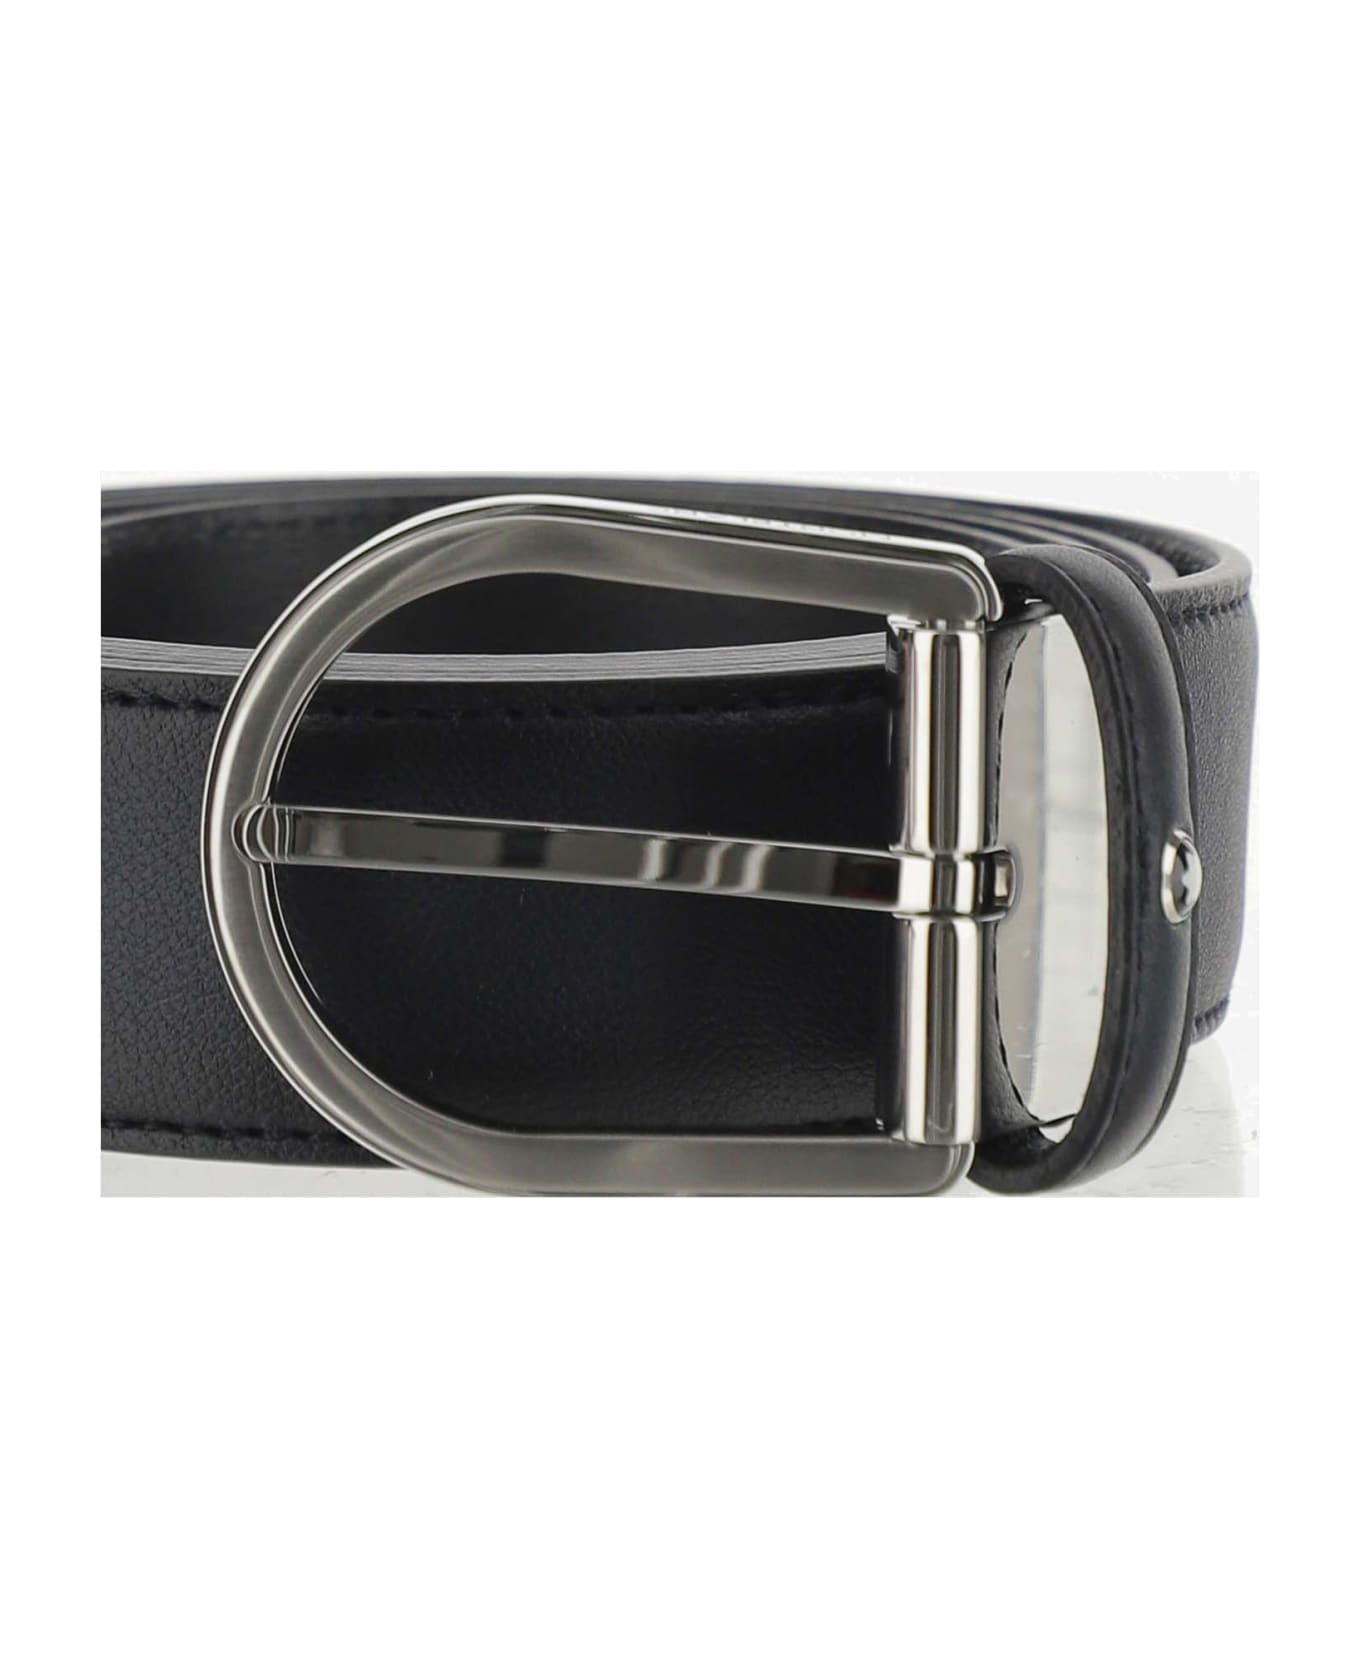 Montblanc Leather Belt With Emblem - Black